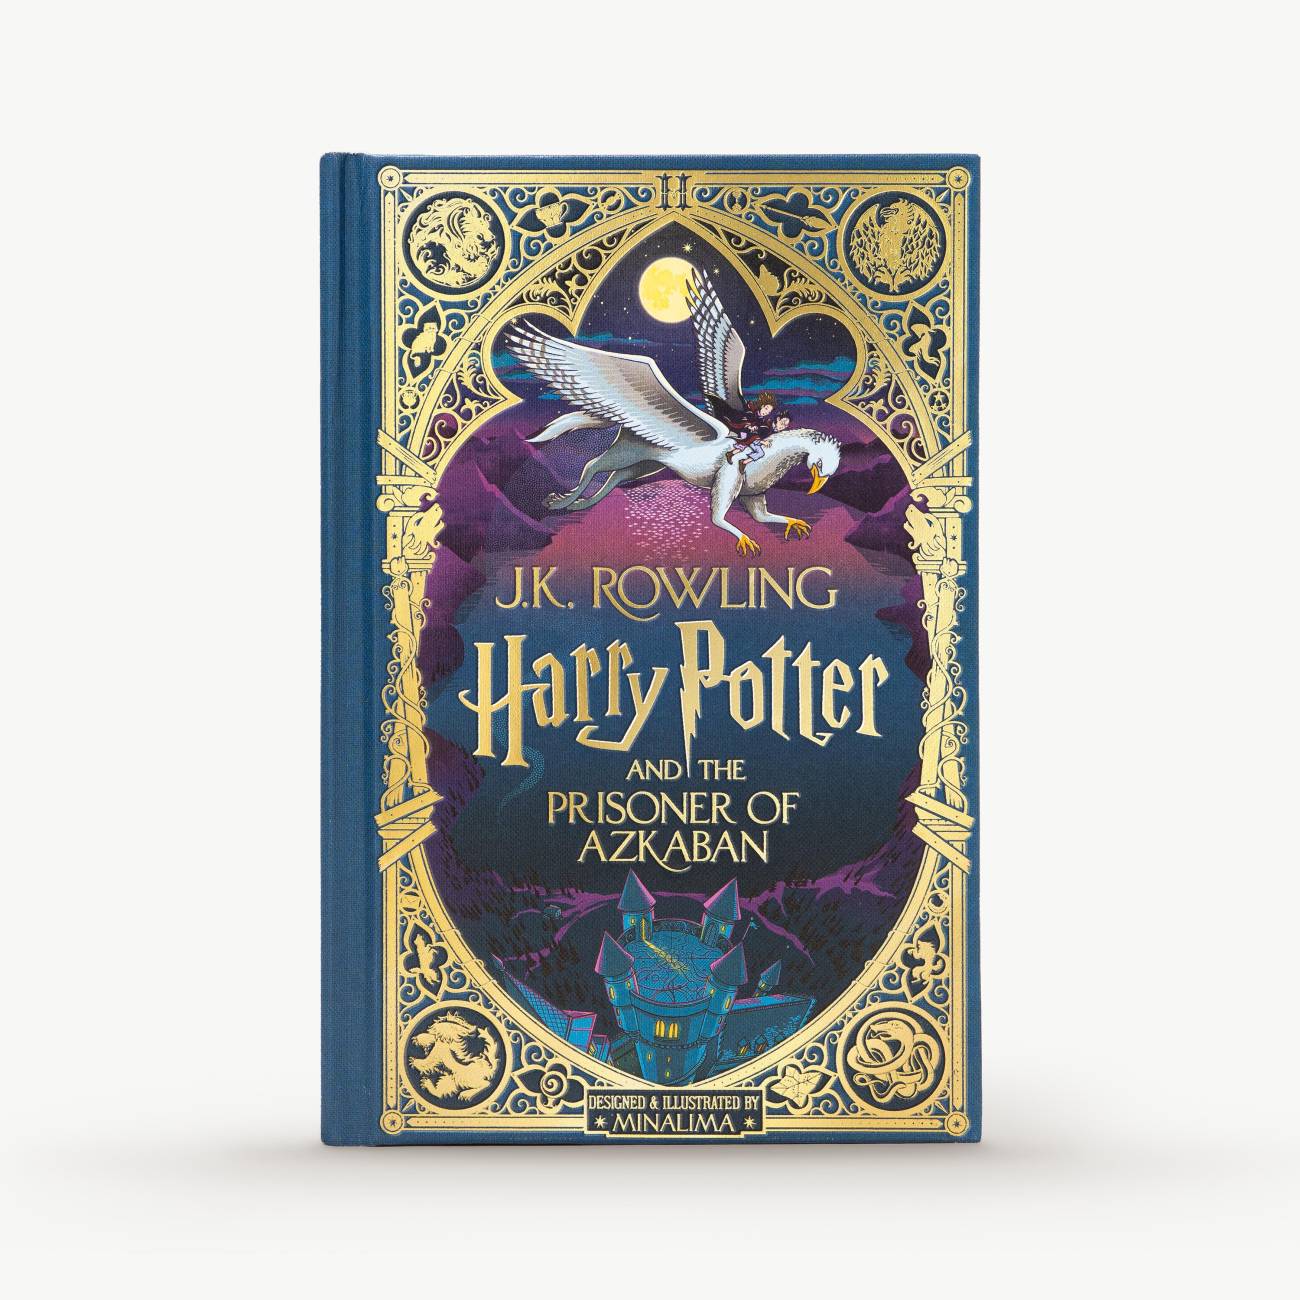 Buy Harry Potter Books Set online